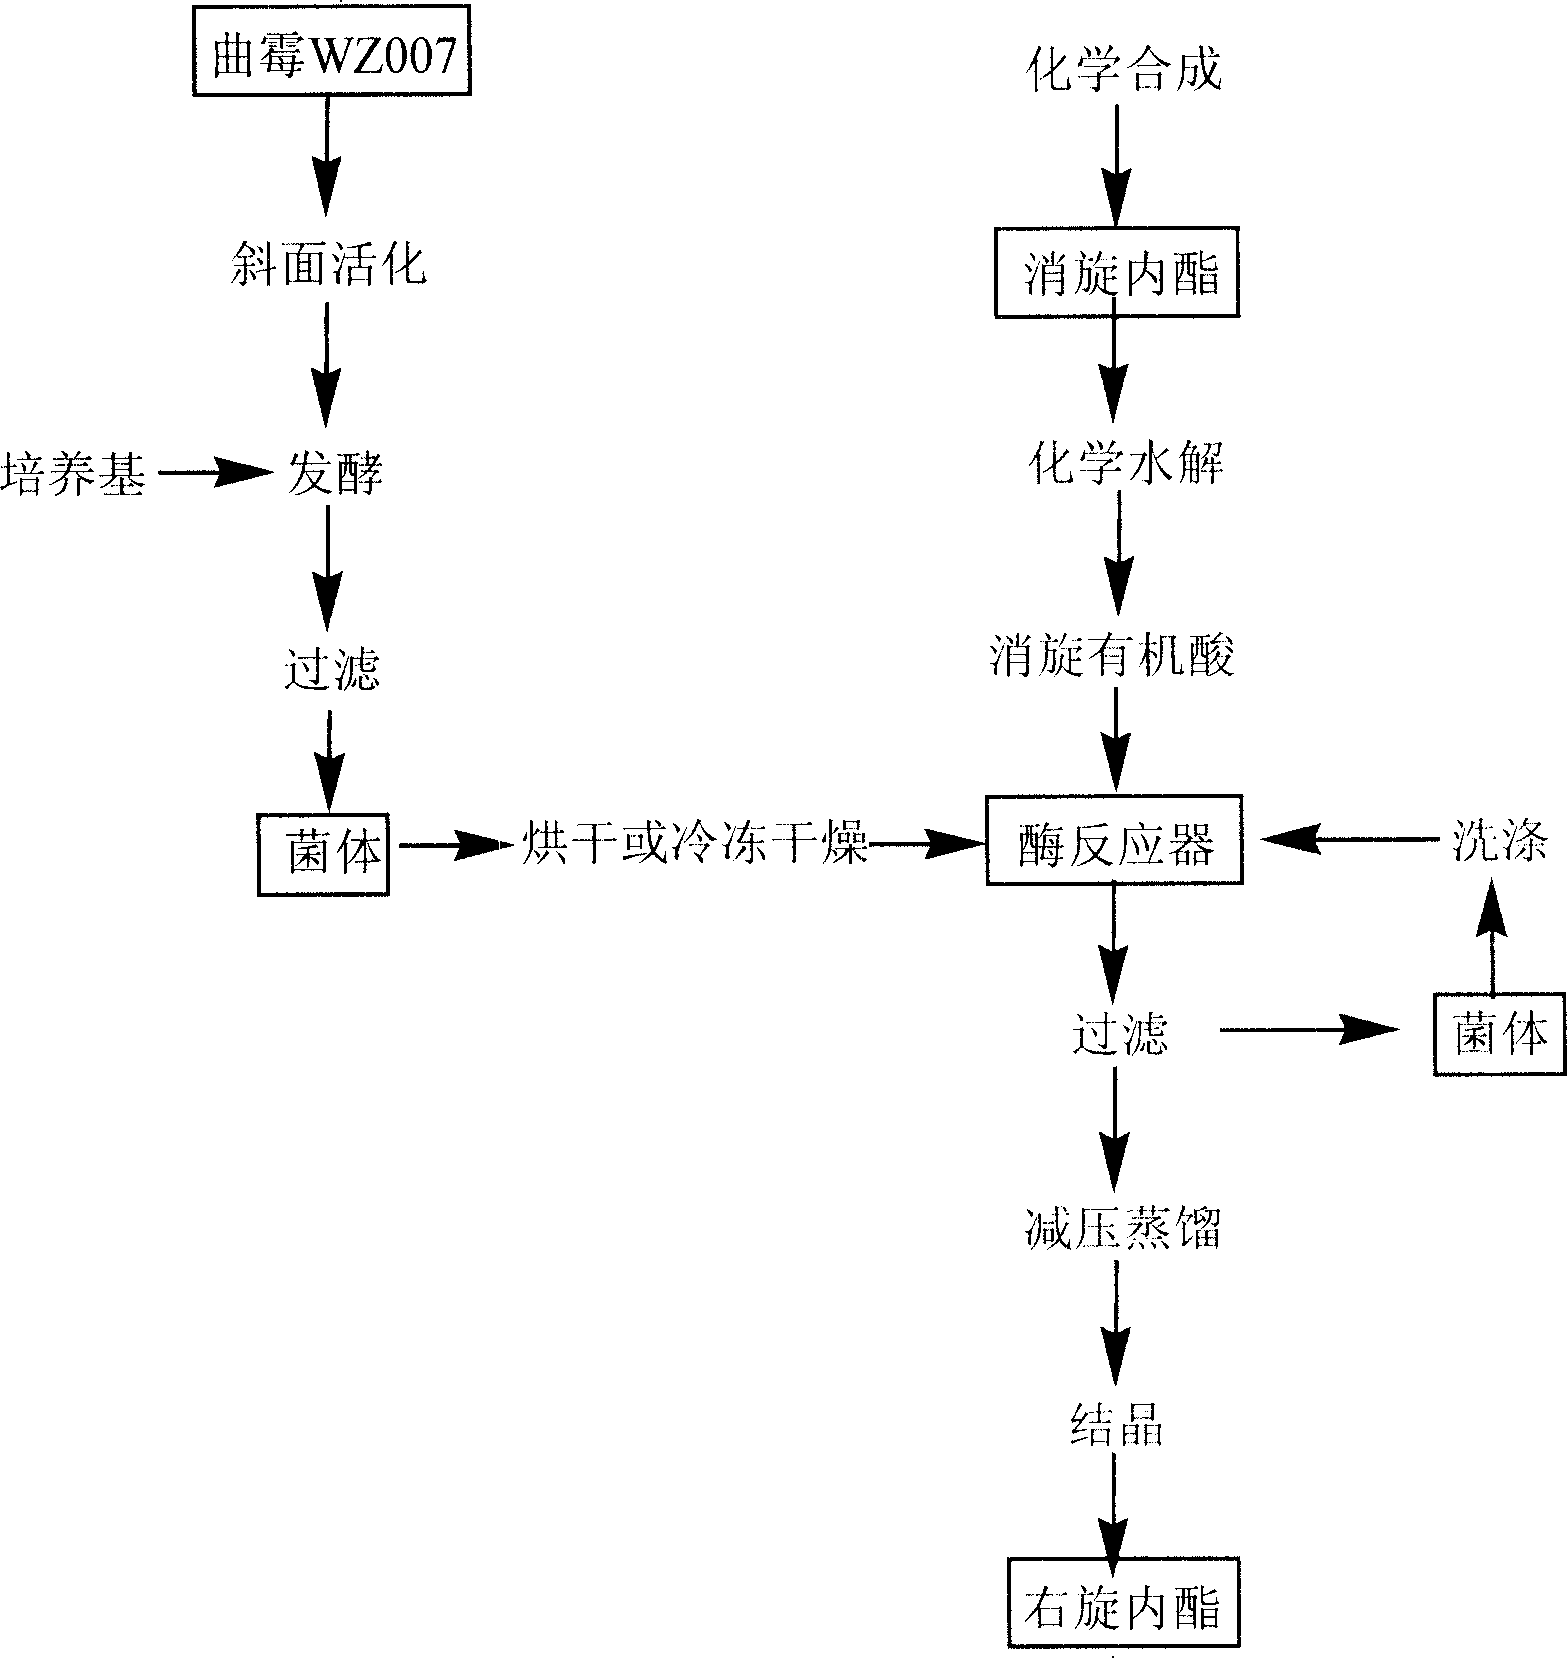 Method for preparing dextral biotin intermediate lactone